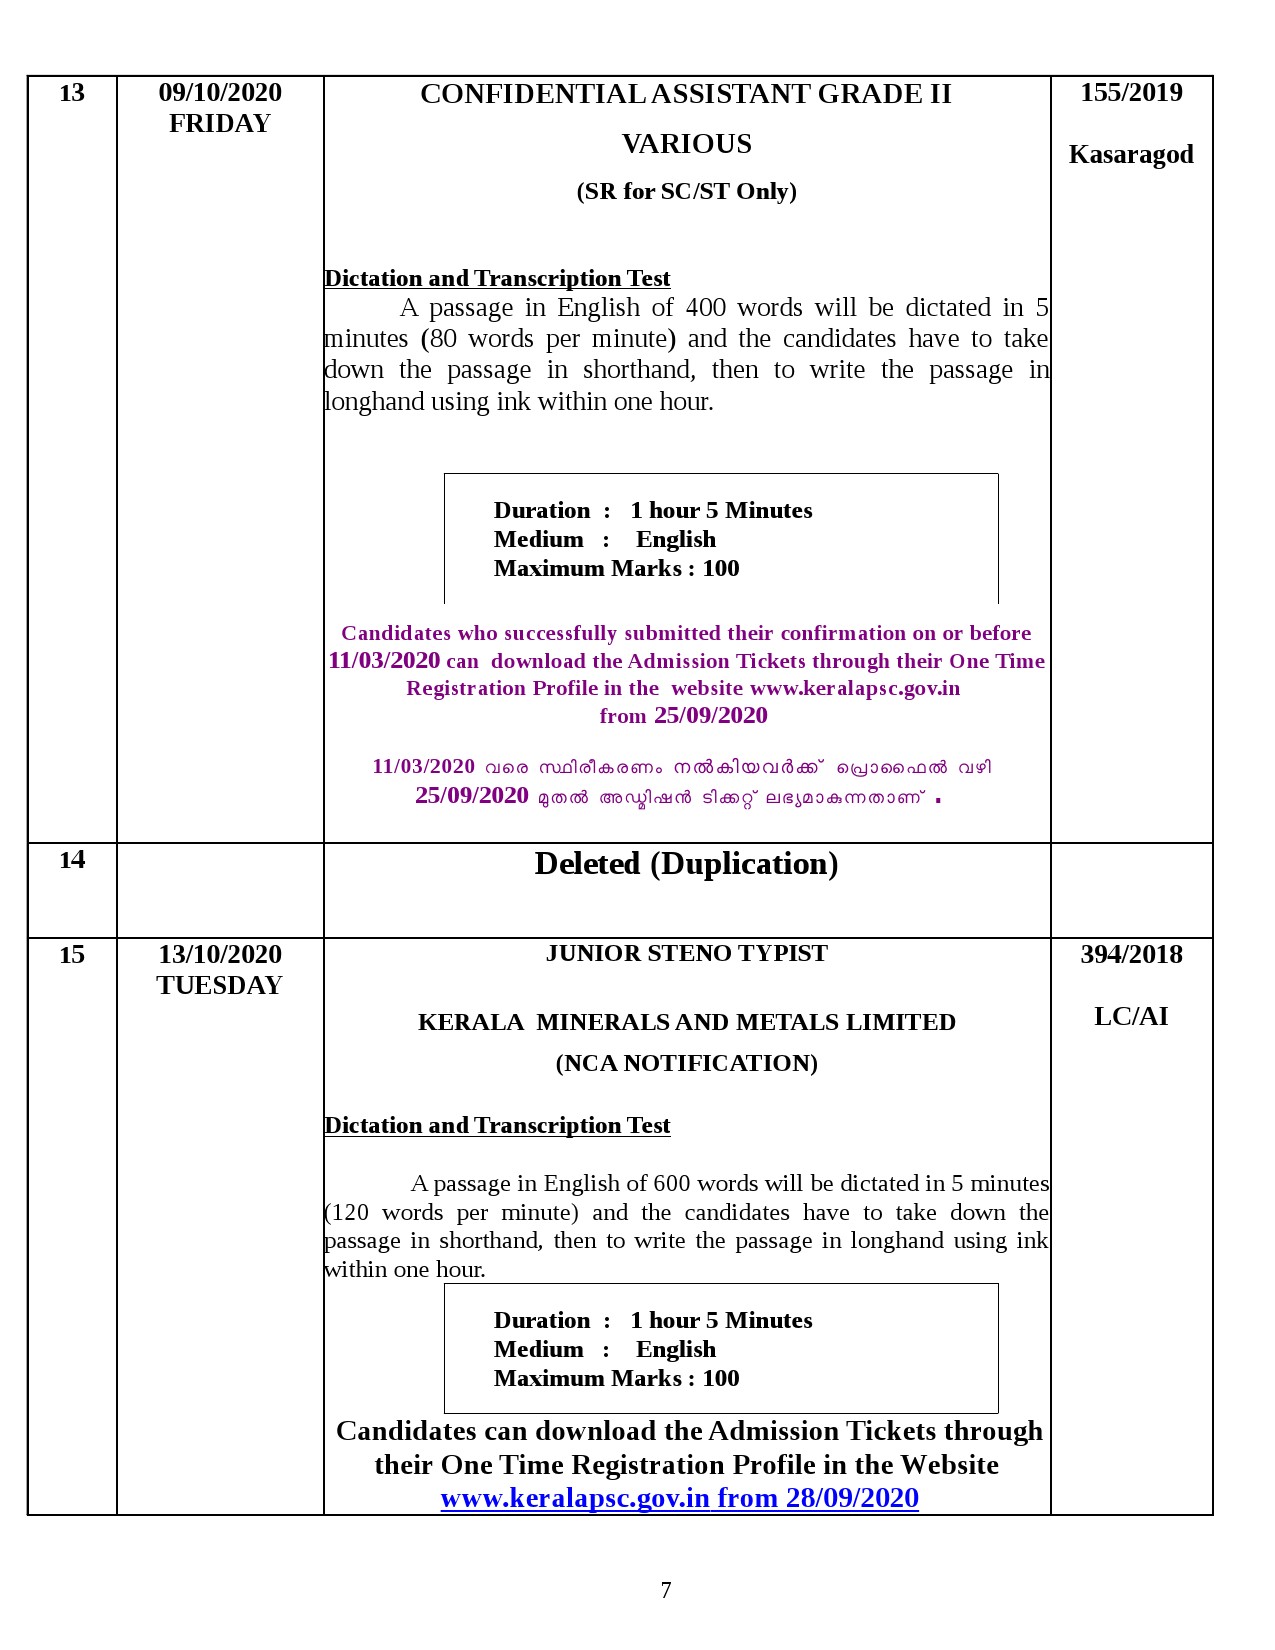 Kerala PSC Exam Calendar October 2020 - Notification Image 7